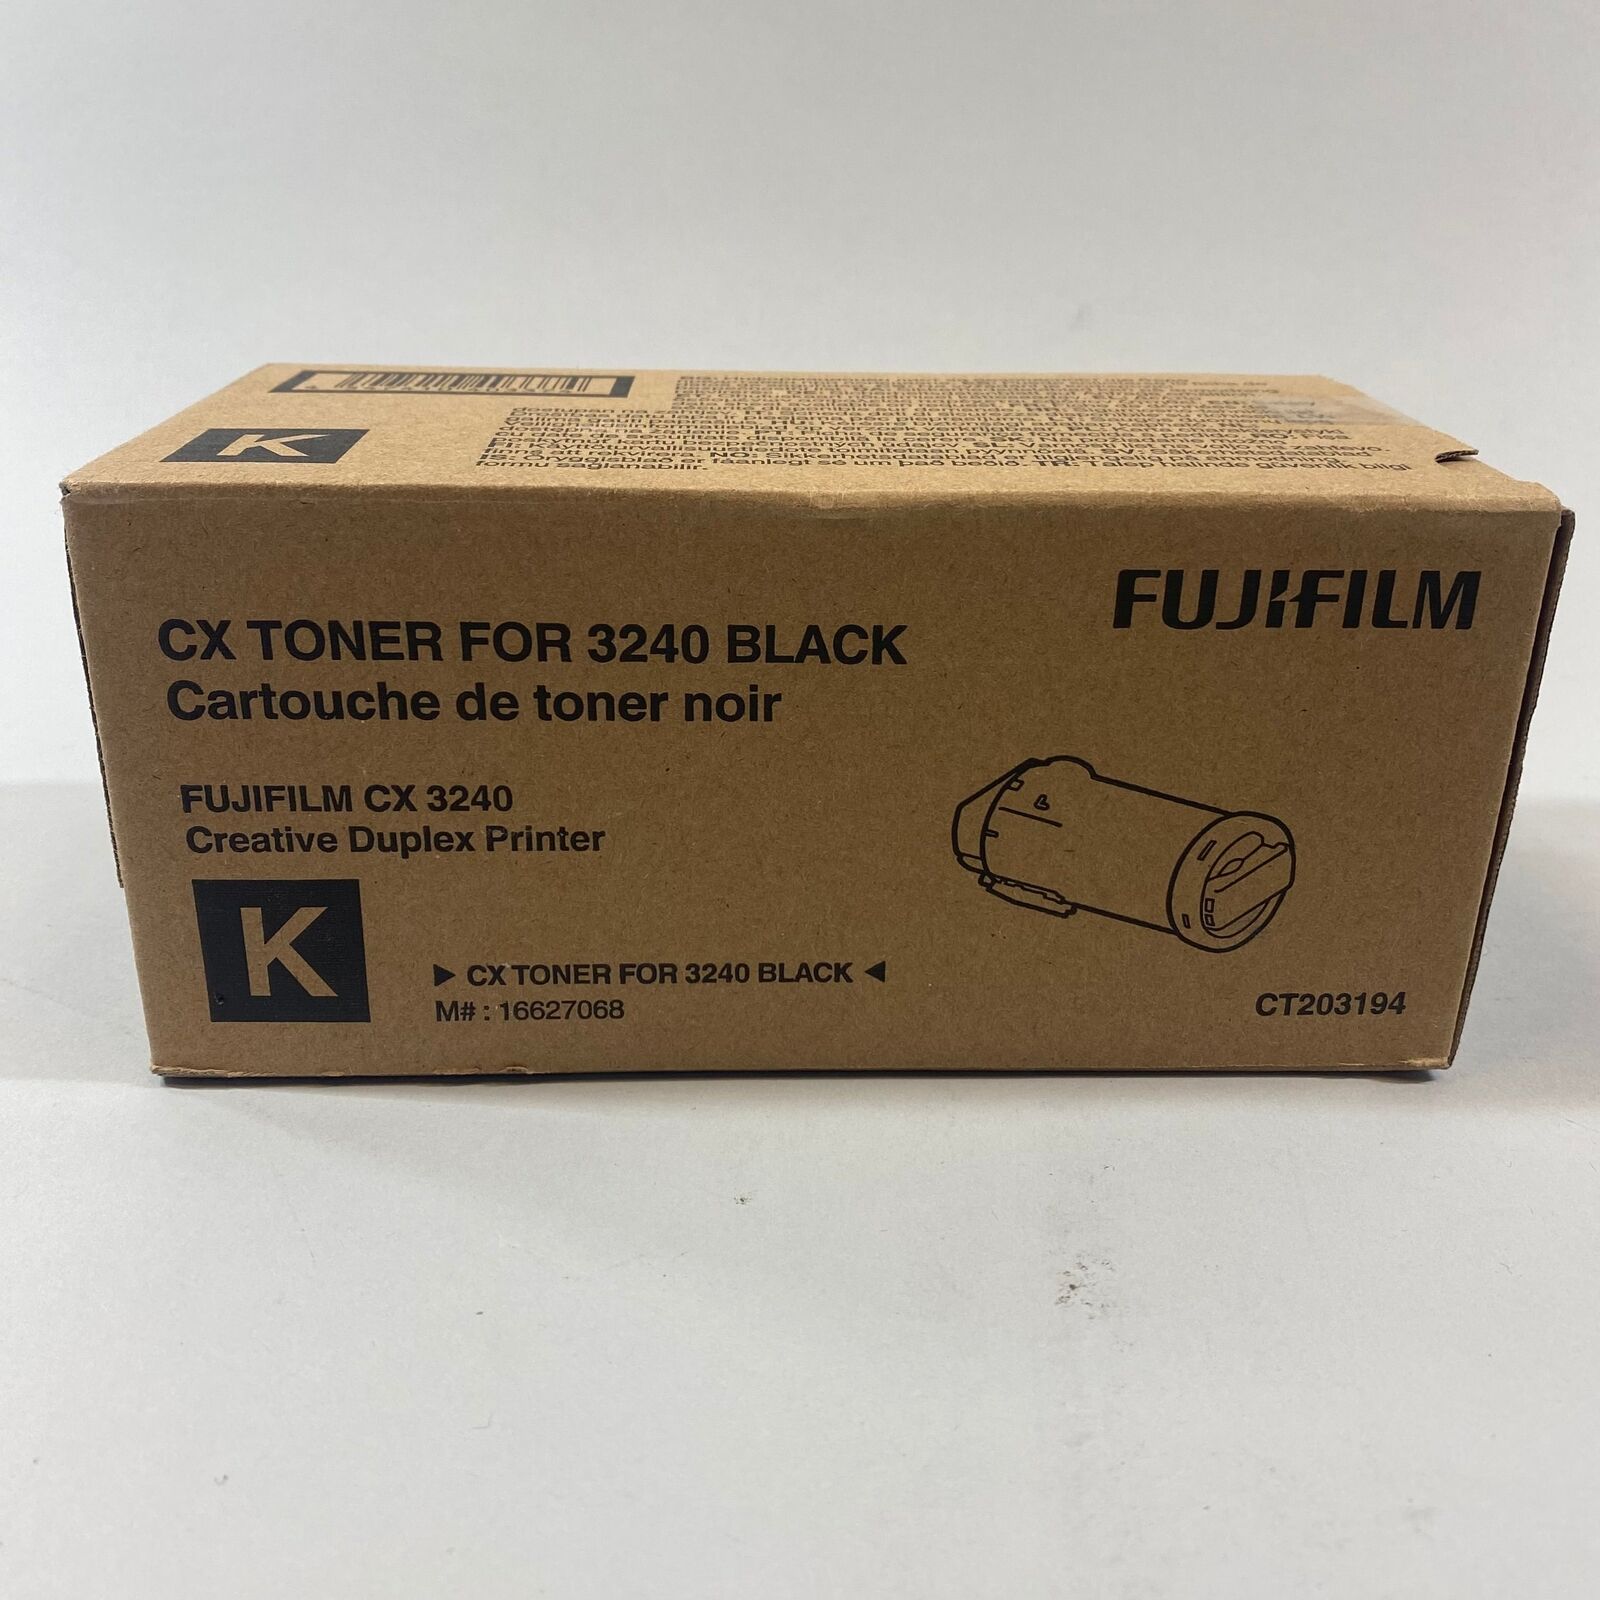 New Fujifilm CT203194 Black Toner For CX 3240